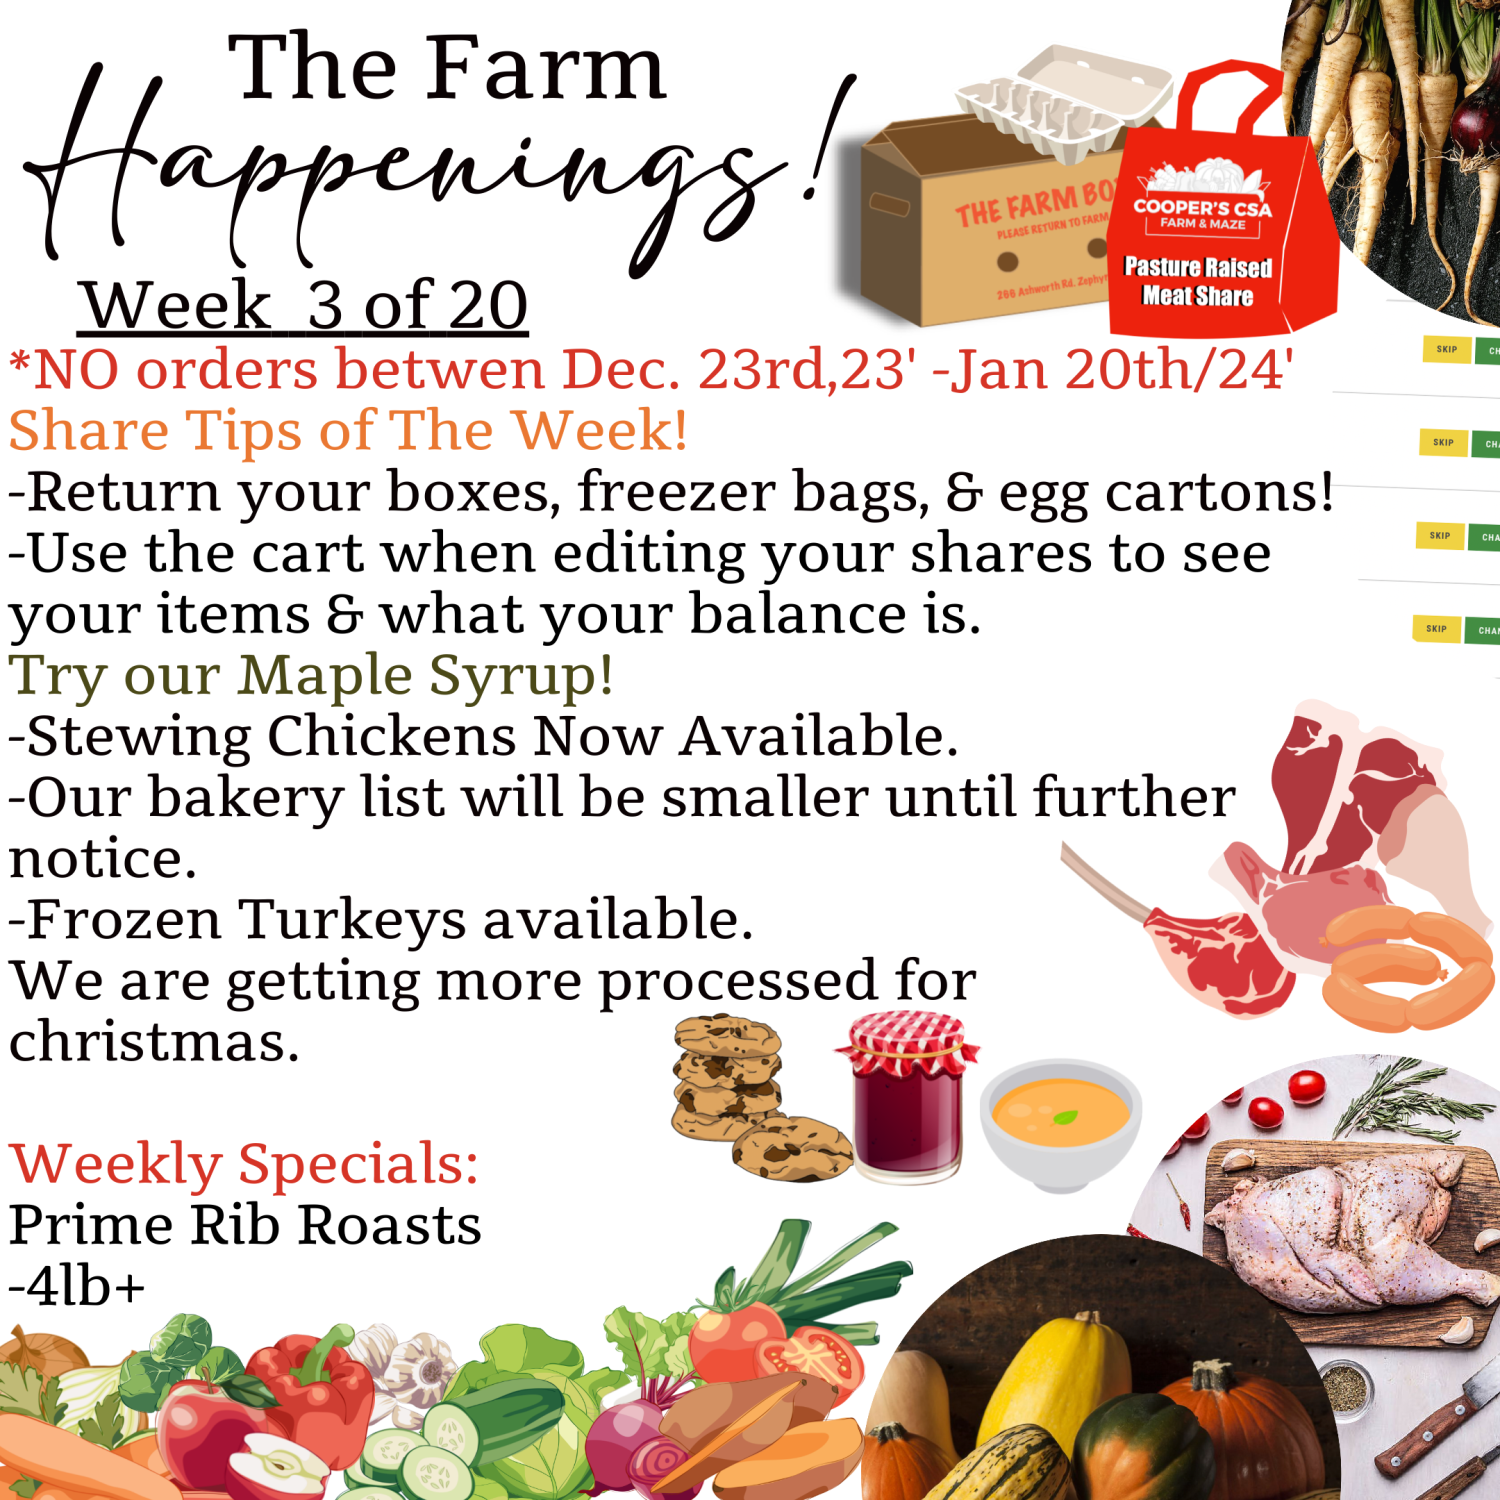 "The Farm Box"-Coopers CSA Farm Farm Happenings November 28th-Dec.2nd